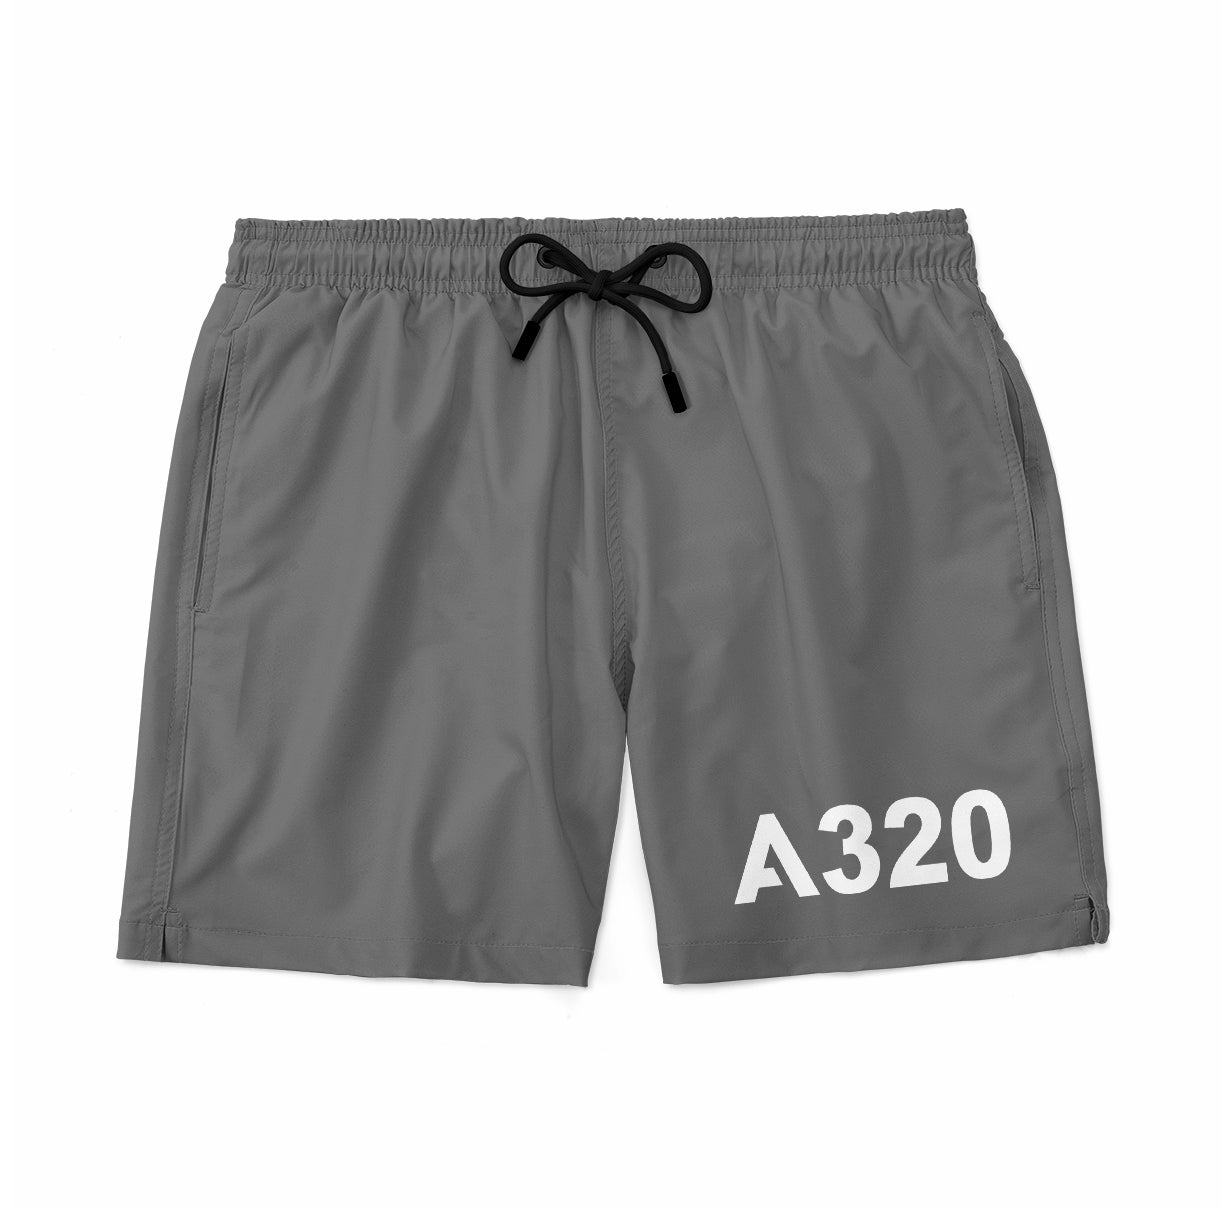 A320 Flat Text Designed Swim Trunks & Shorts